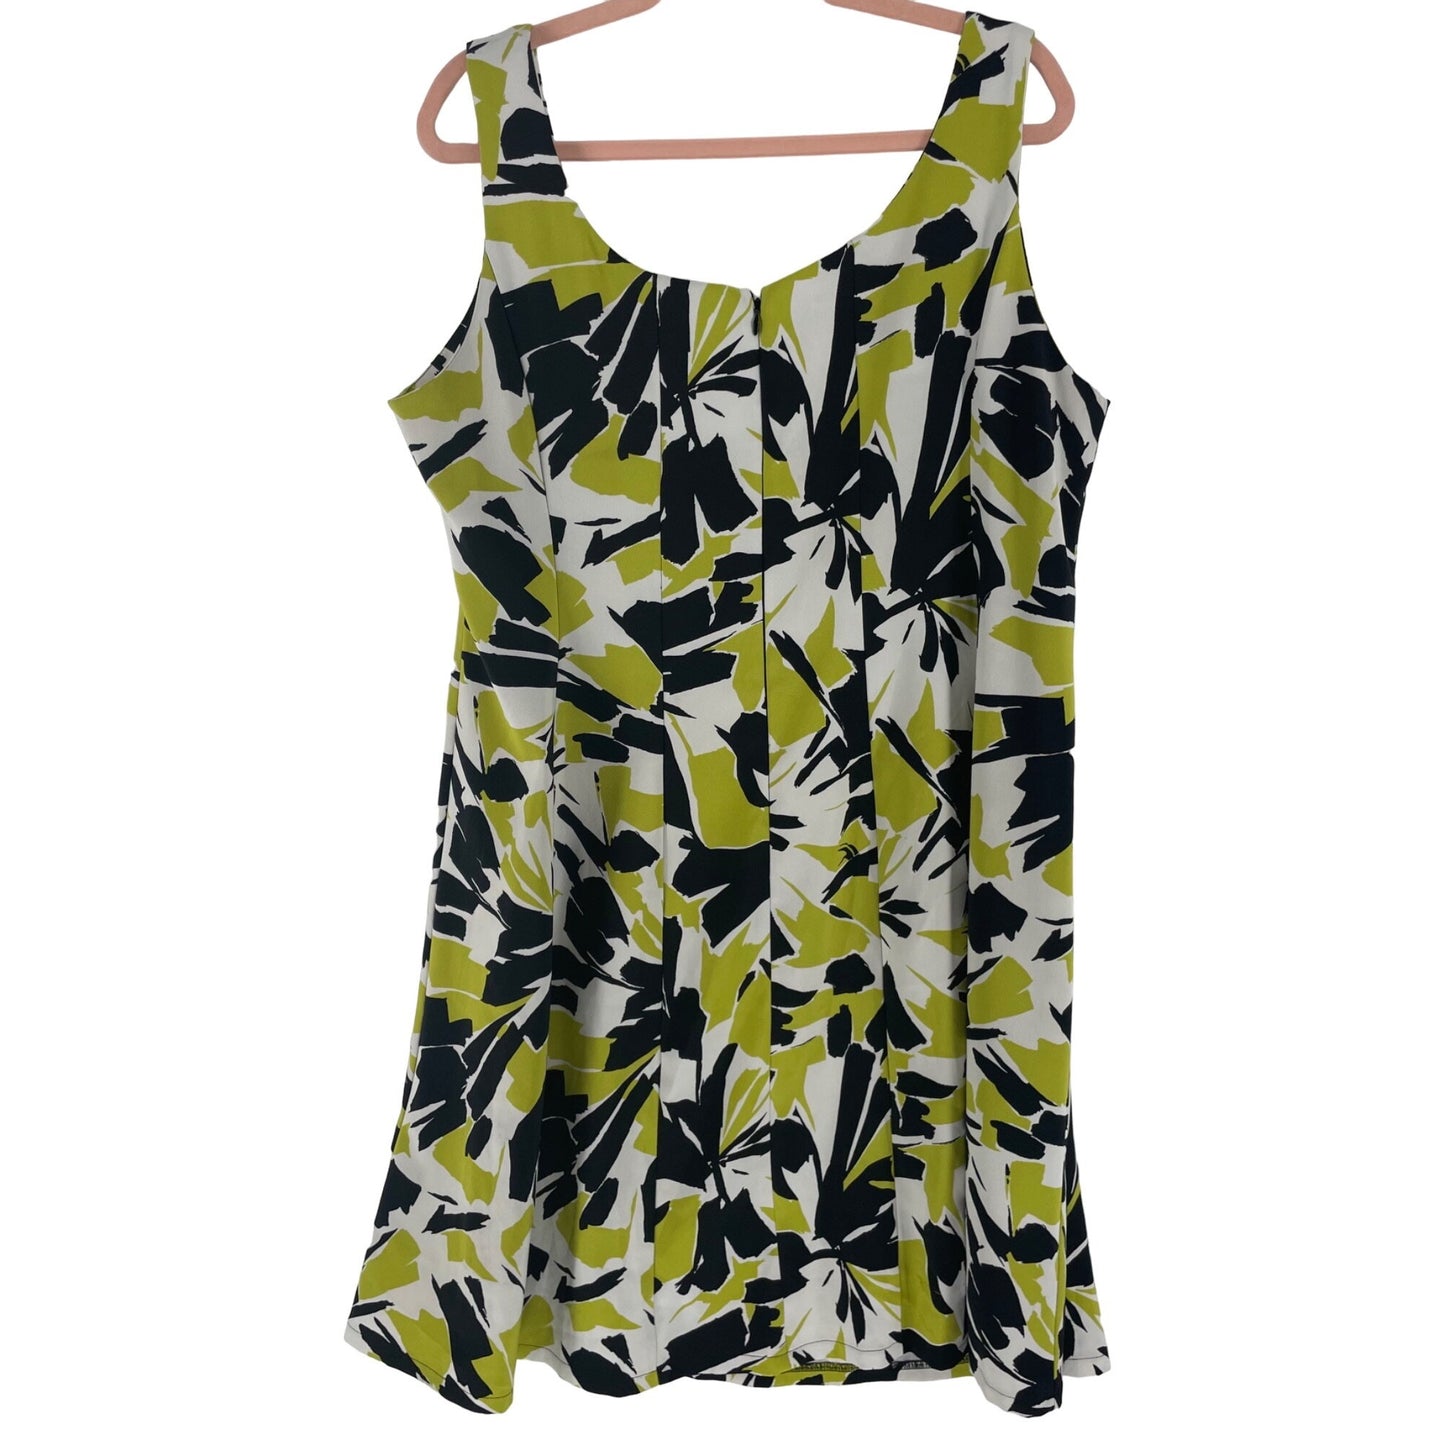 Women's Size 22/24 Sleeveless Lime Green/Black/White Dress